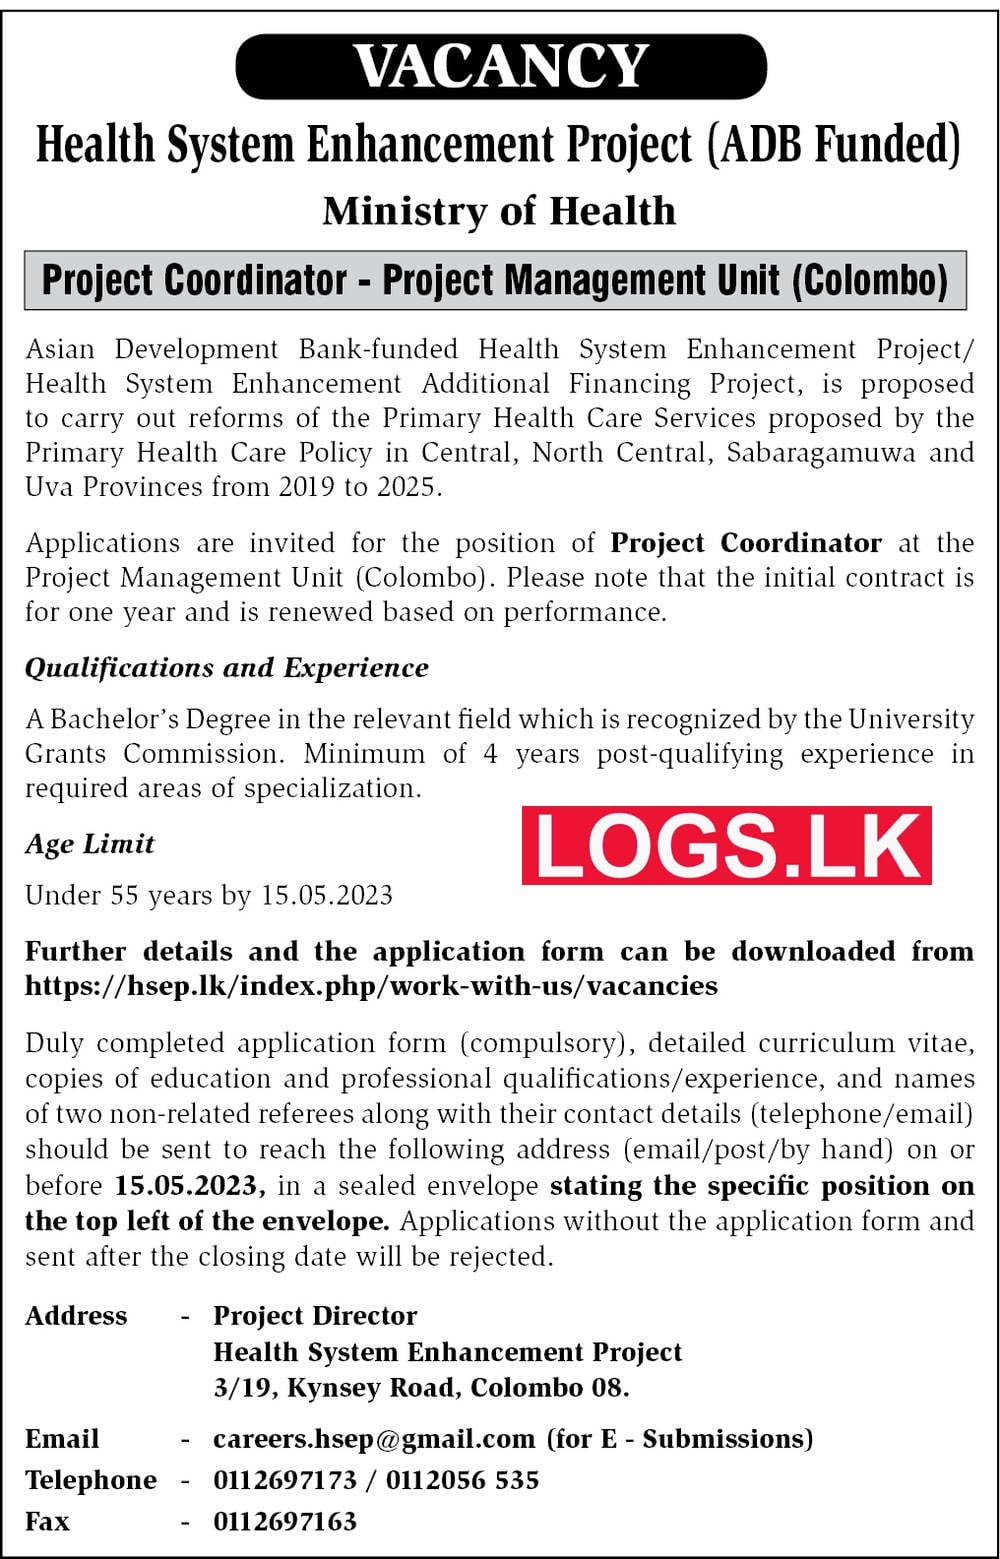 Project Coordinator - Health System Enhancement Project Vacancies 2023 Application Form, Details Download